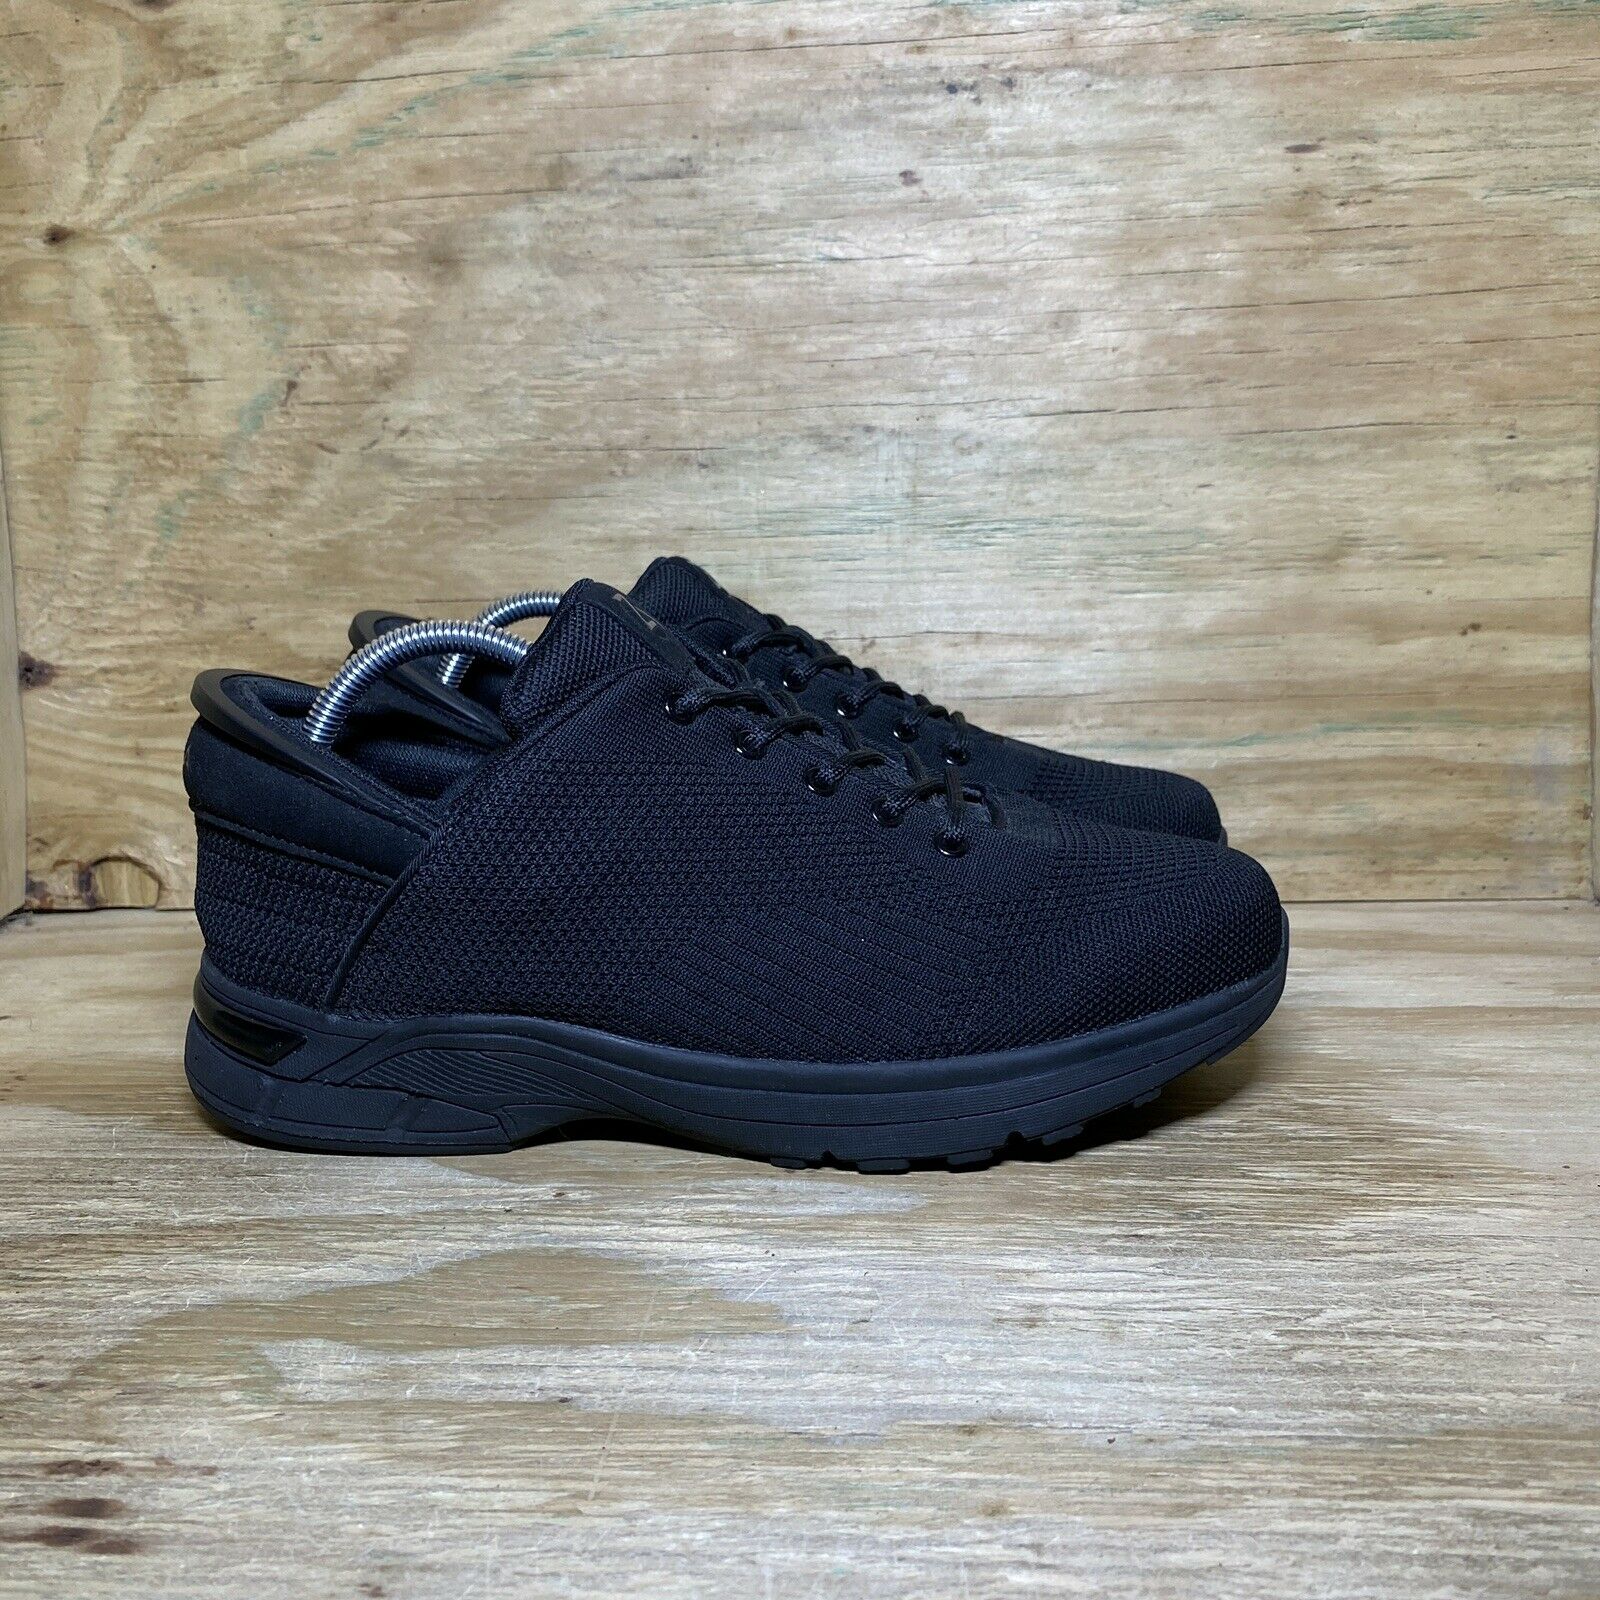 Zeba Handsfree Athletic Shoes Mens Size 9.5 Triple Black